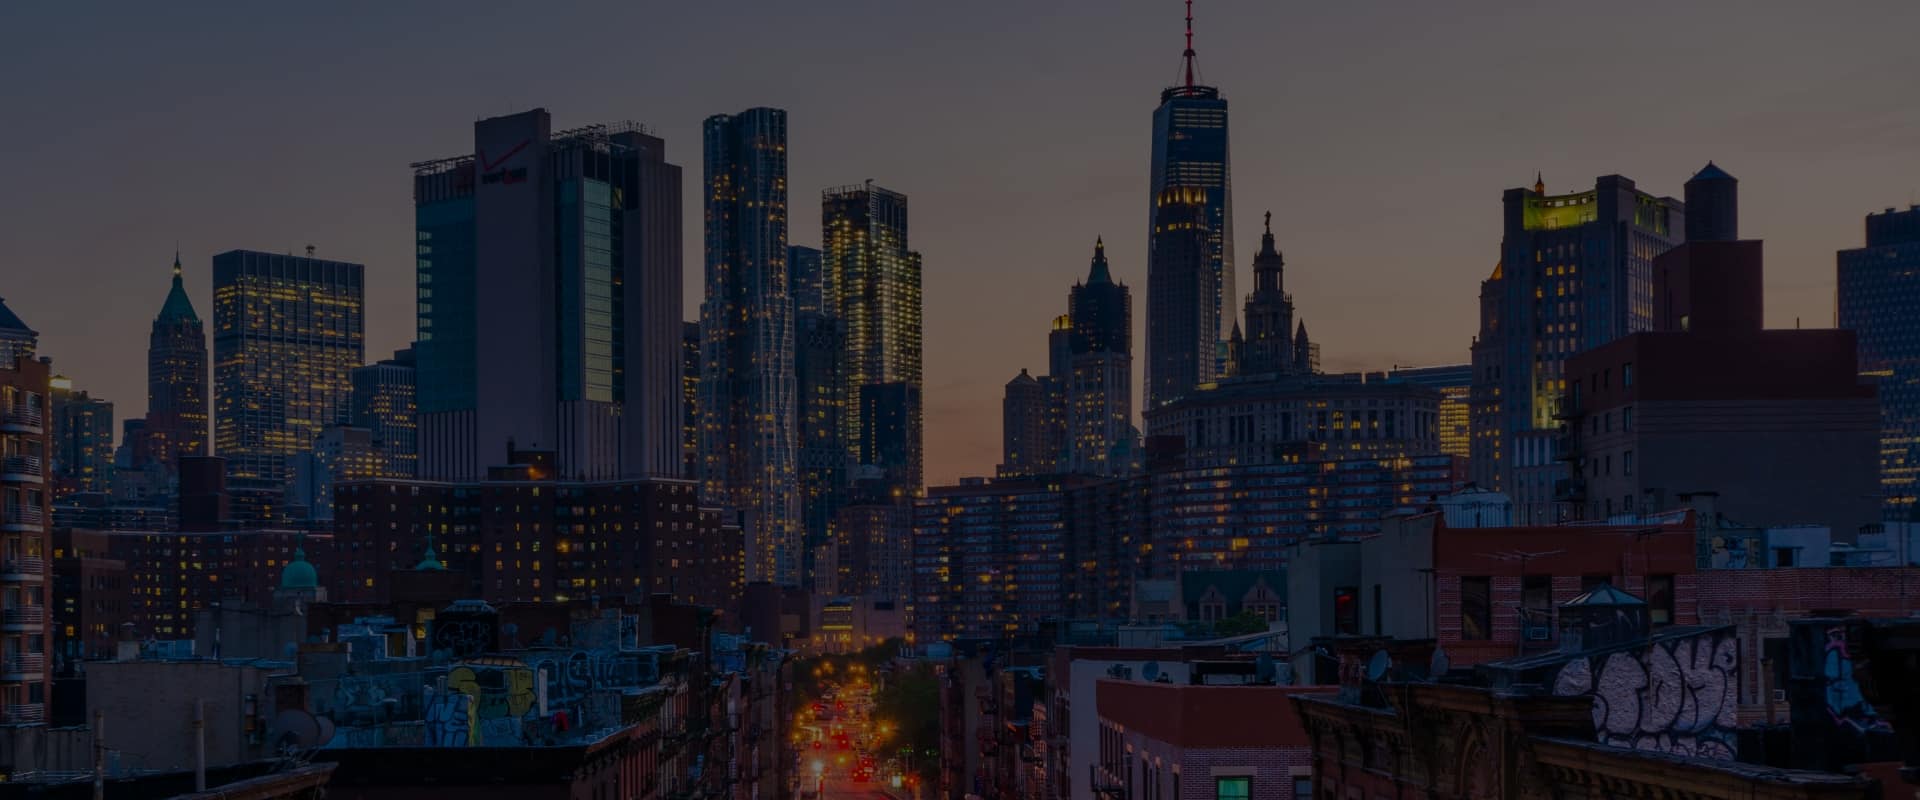 Twilight over a dense urban skyline with illuminated buildings.